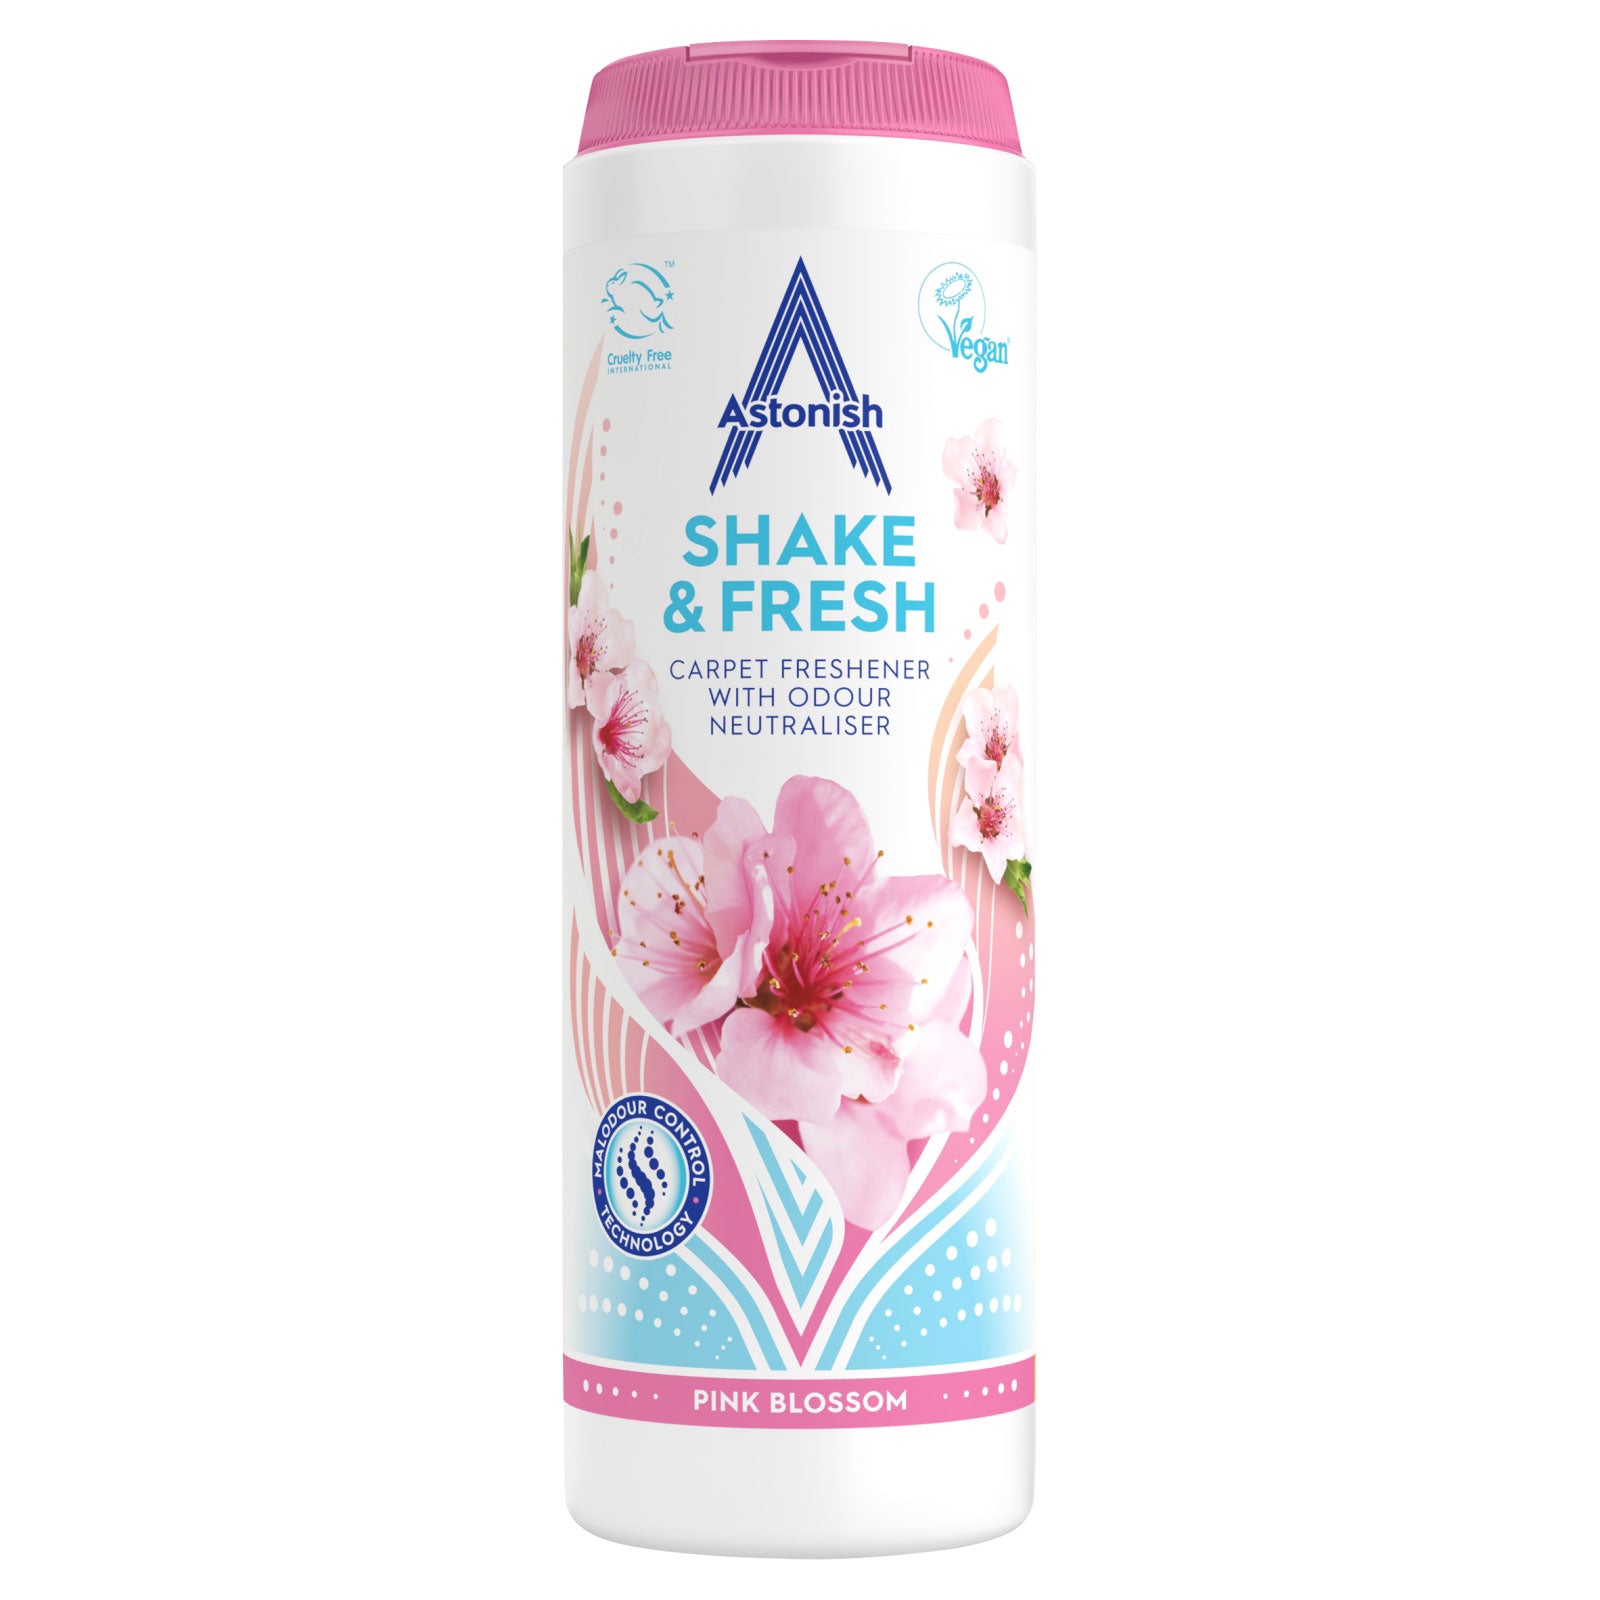 Astonish Shake & Fresh Carpet Freshener Pink Blossom 350g